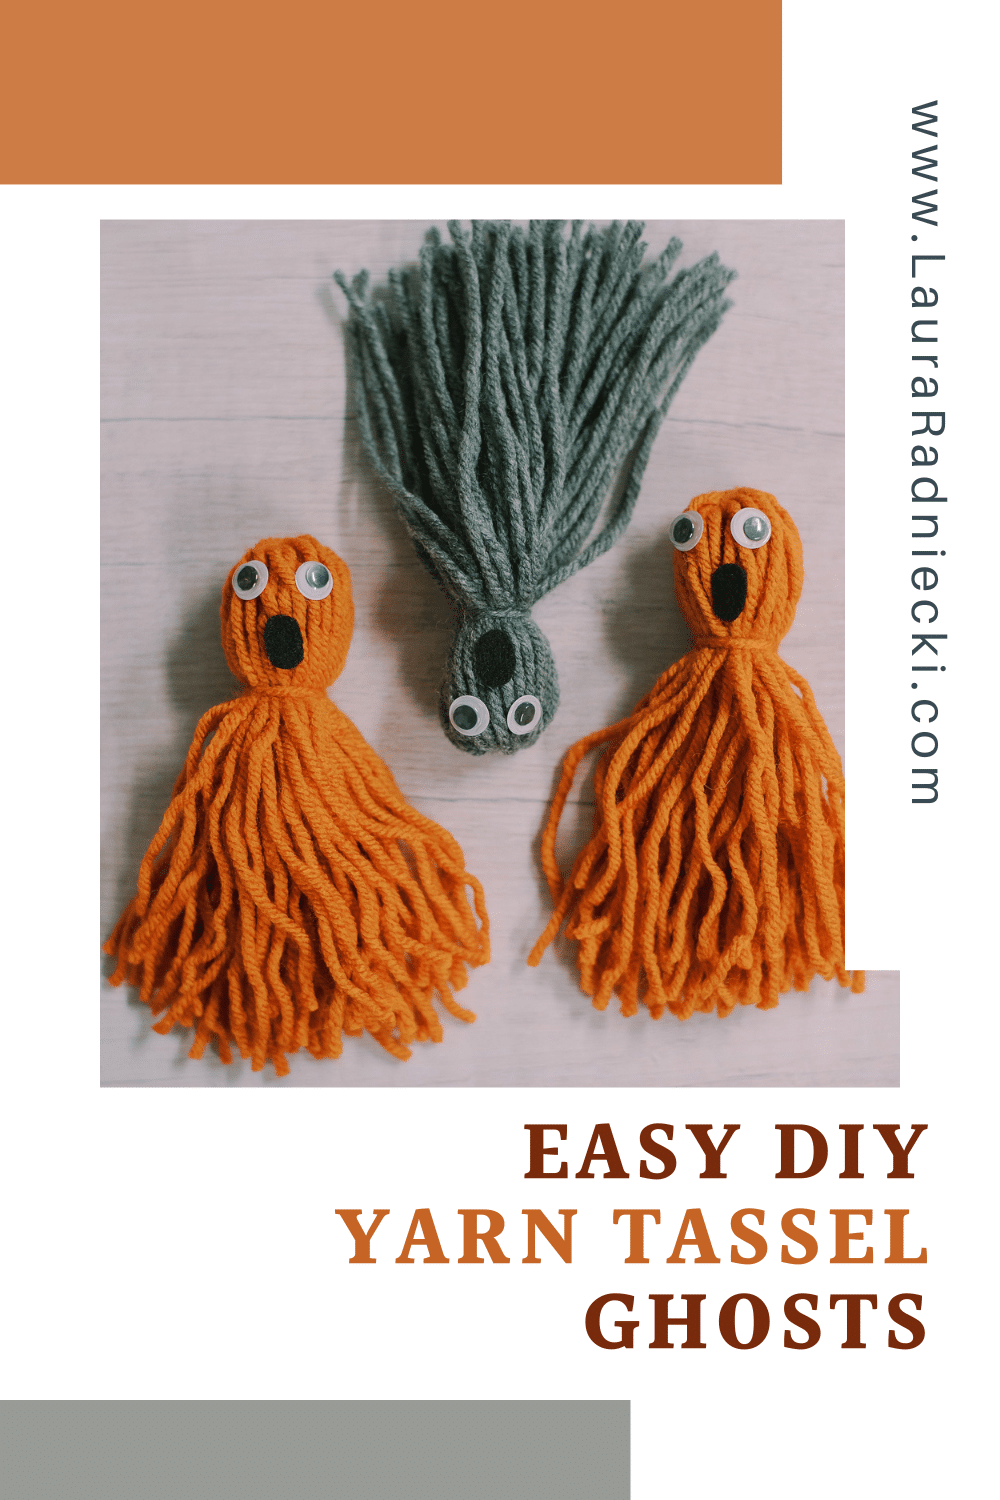 How to Make Yarn Tassel Ghosts for Halloween